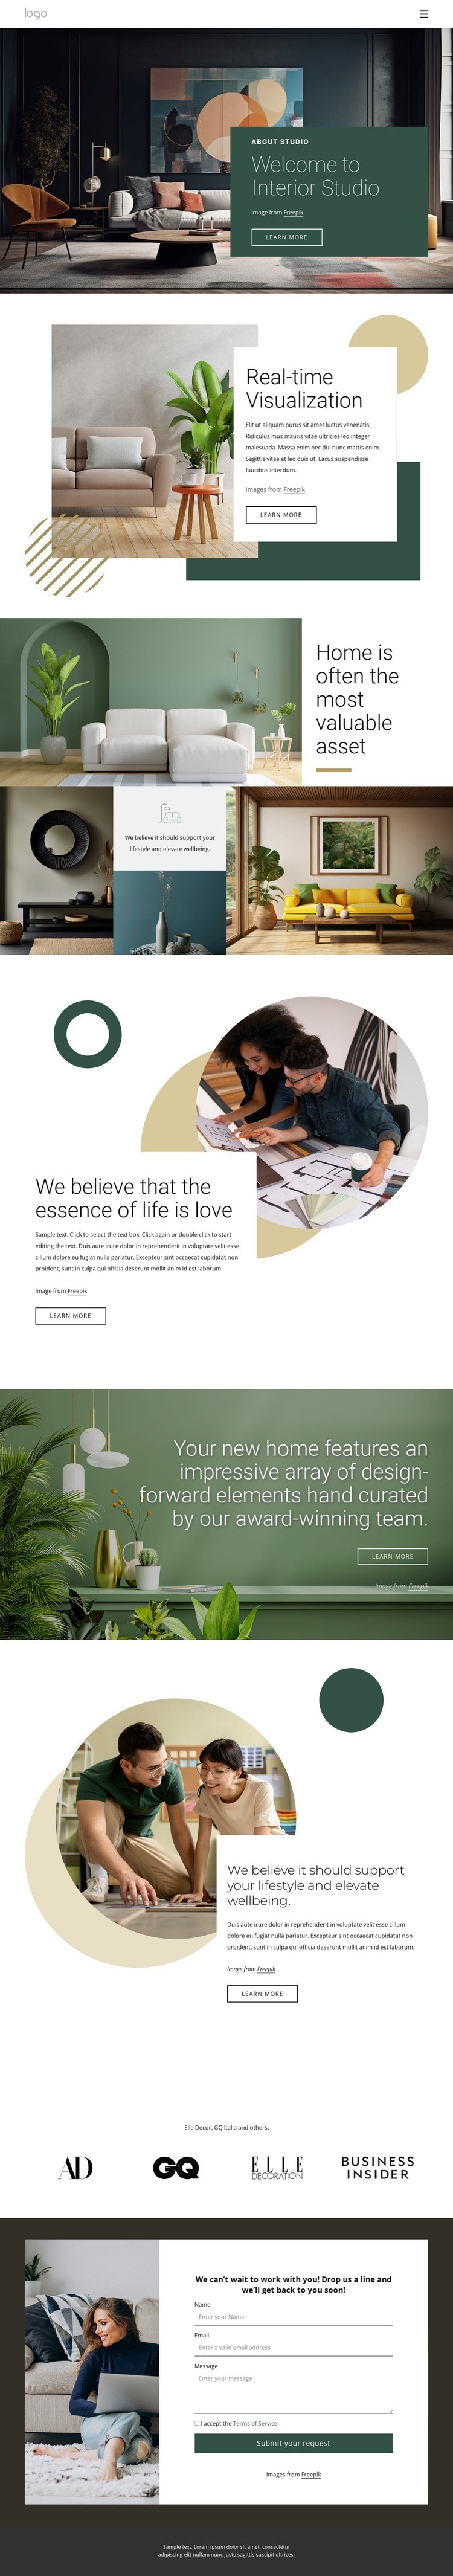 Award-winning interior design studio Homepage Design